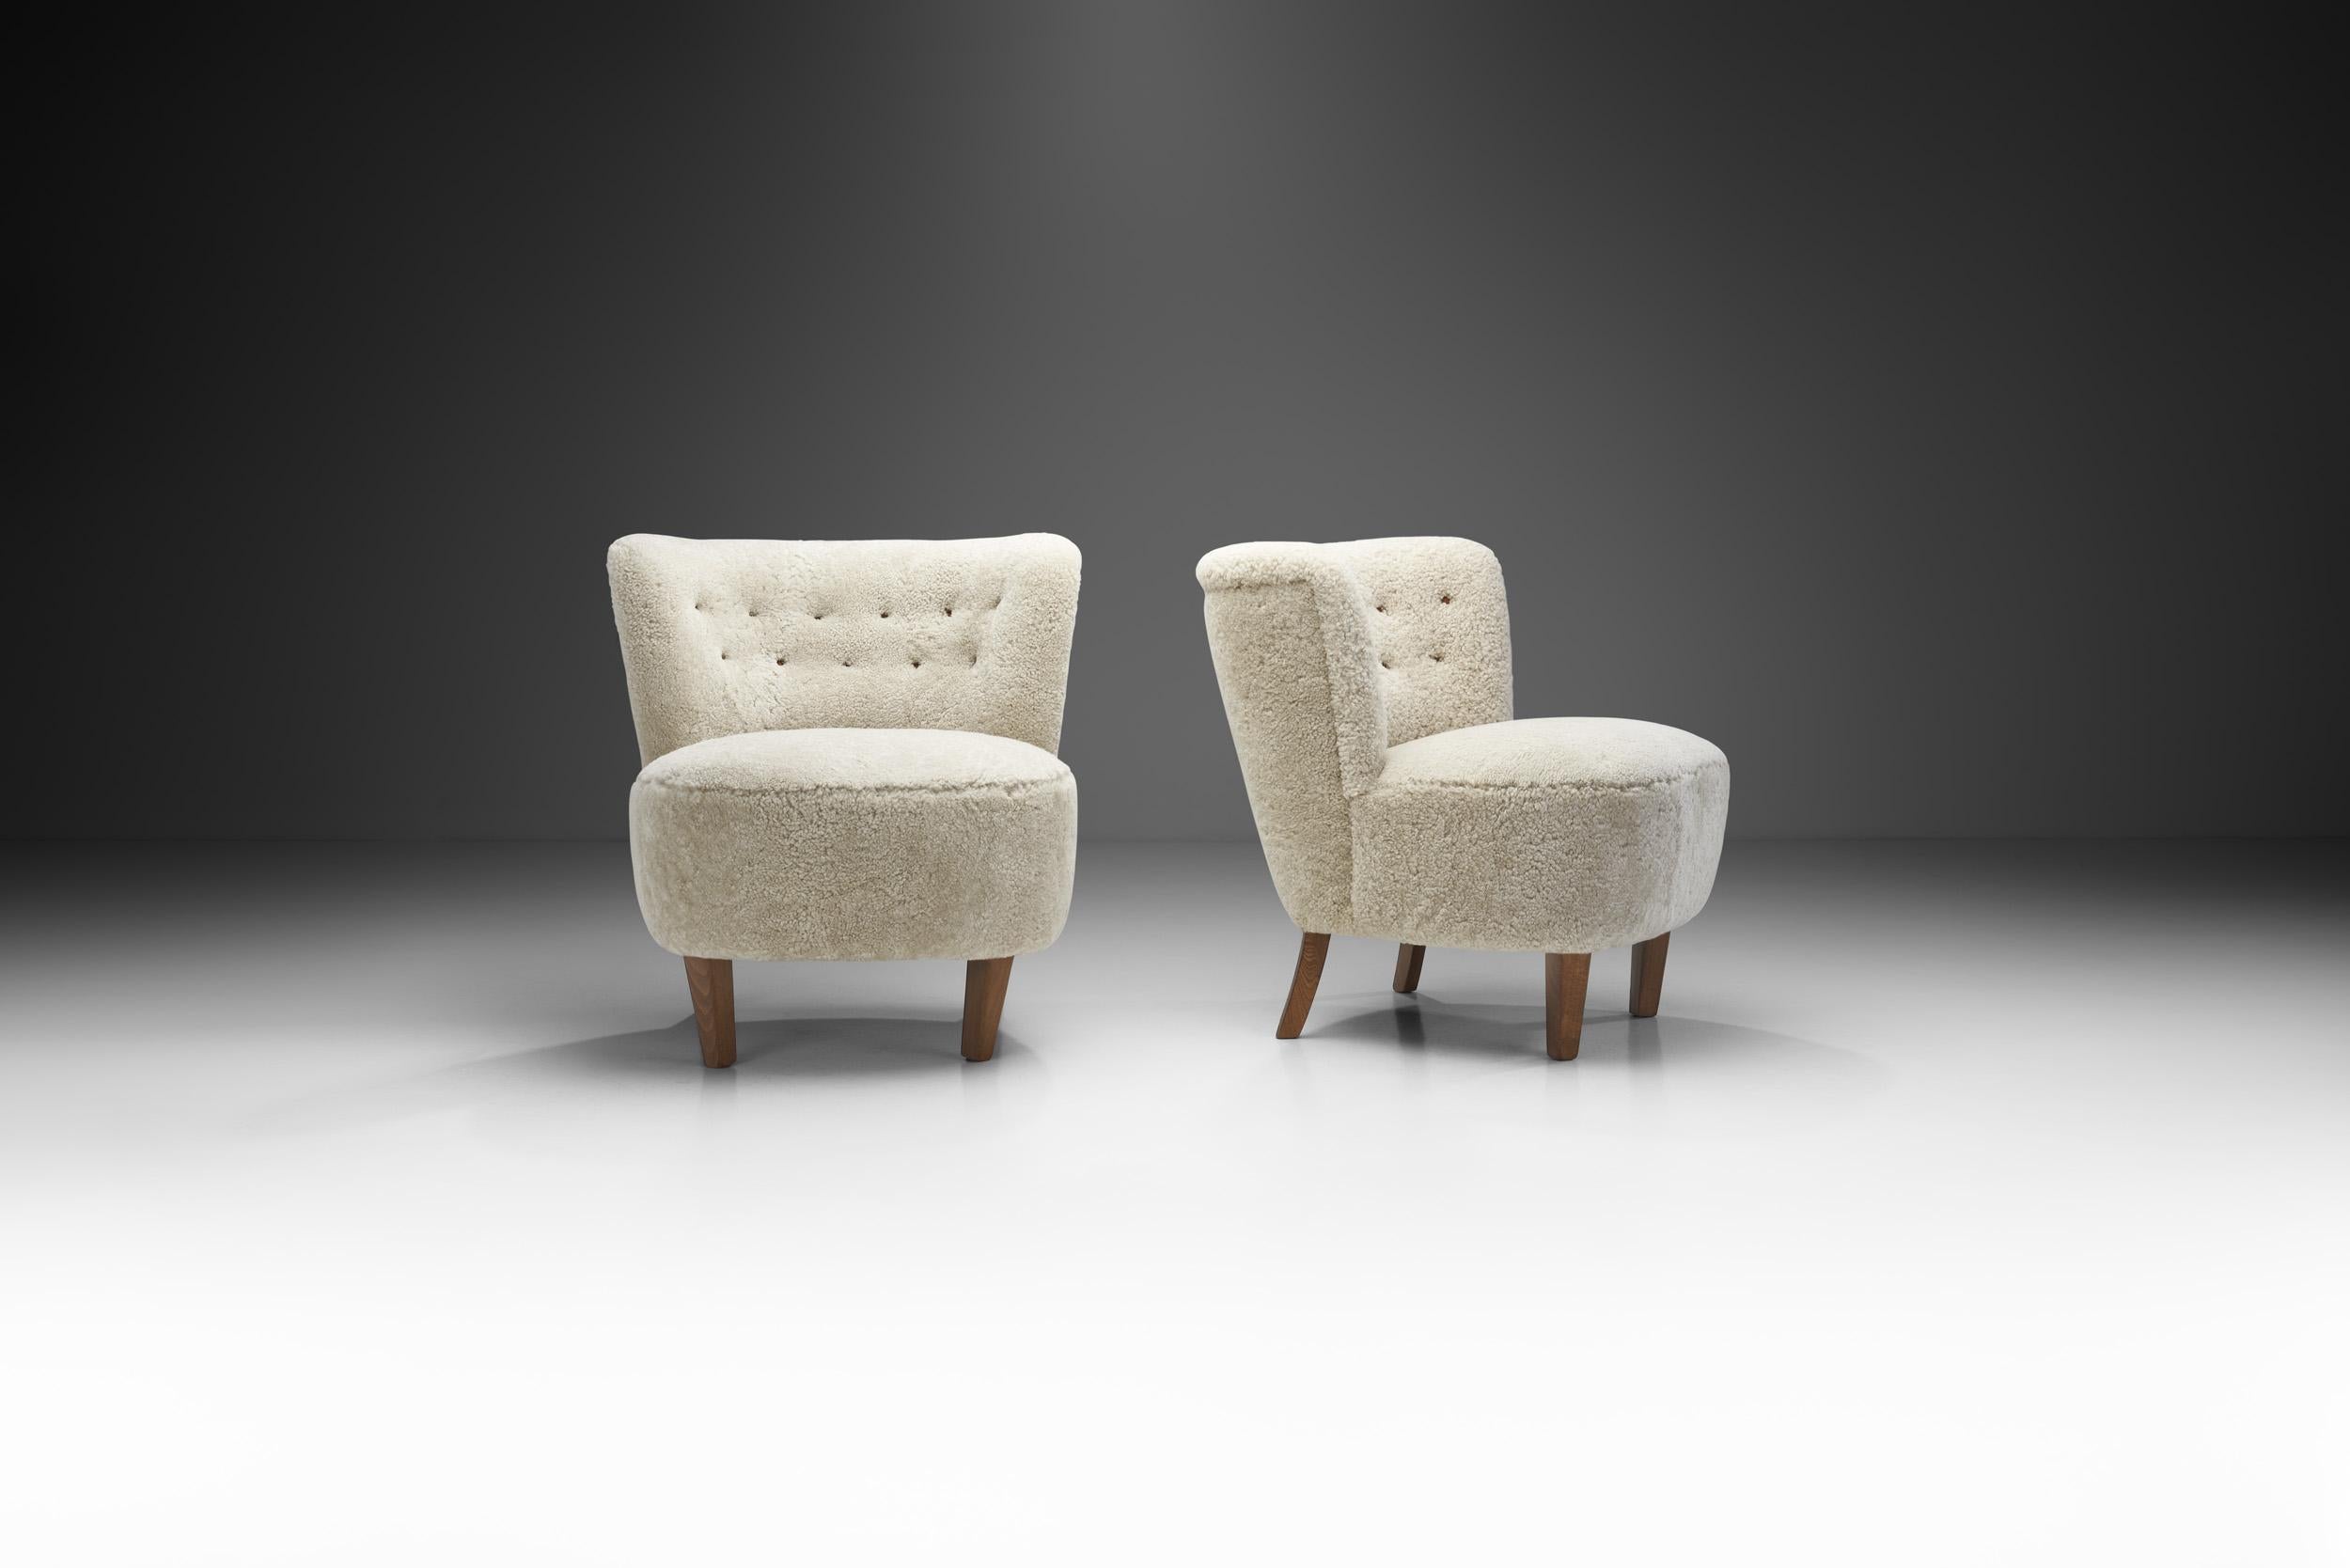 Scandinavian Modern Danish Cabinetmaker Lounge Chairs Upholstered in Sheepskin, Denmark ca 1940s